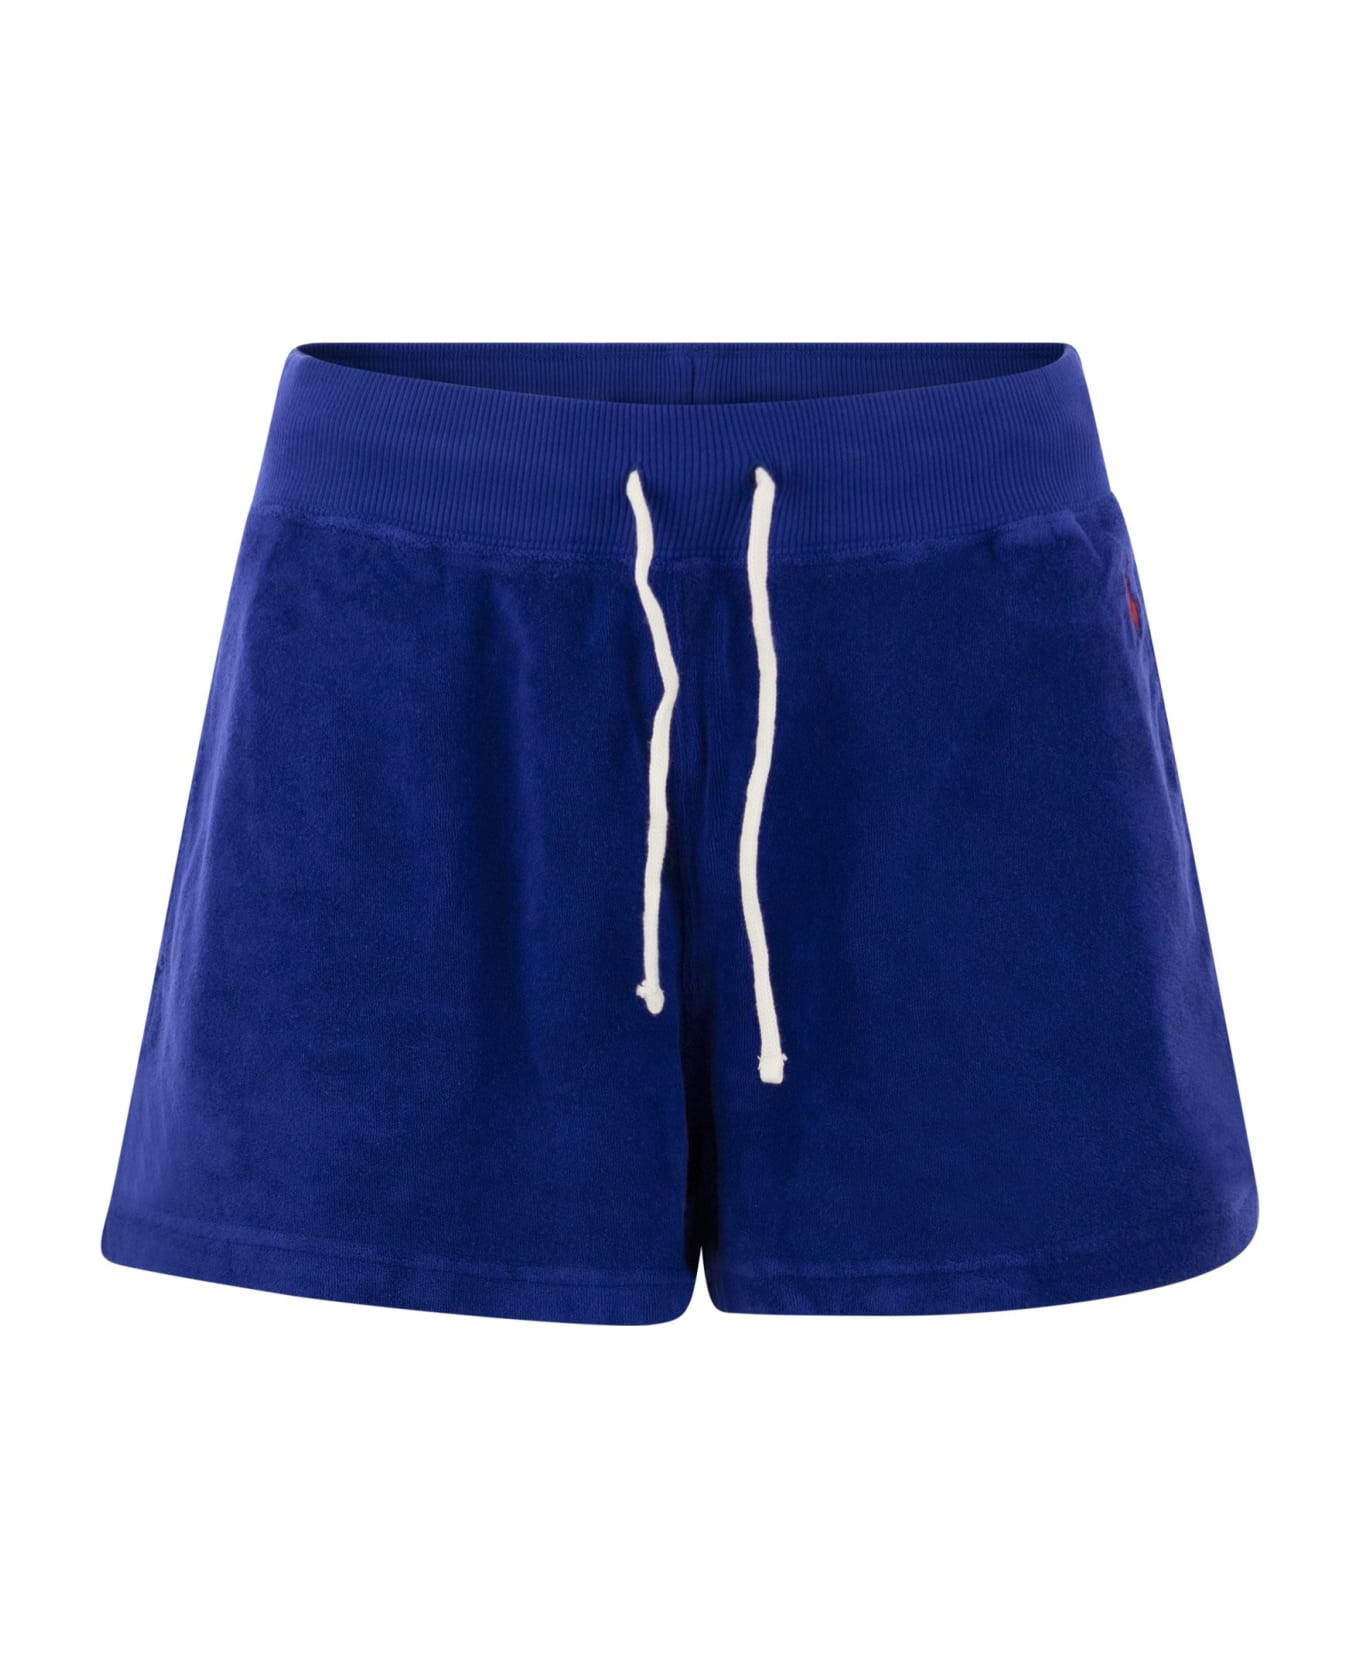 Polo Ralph Lauren Sponge Shorts With Drawstring - Royal Blue ショートパンツ